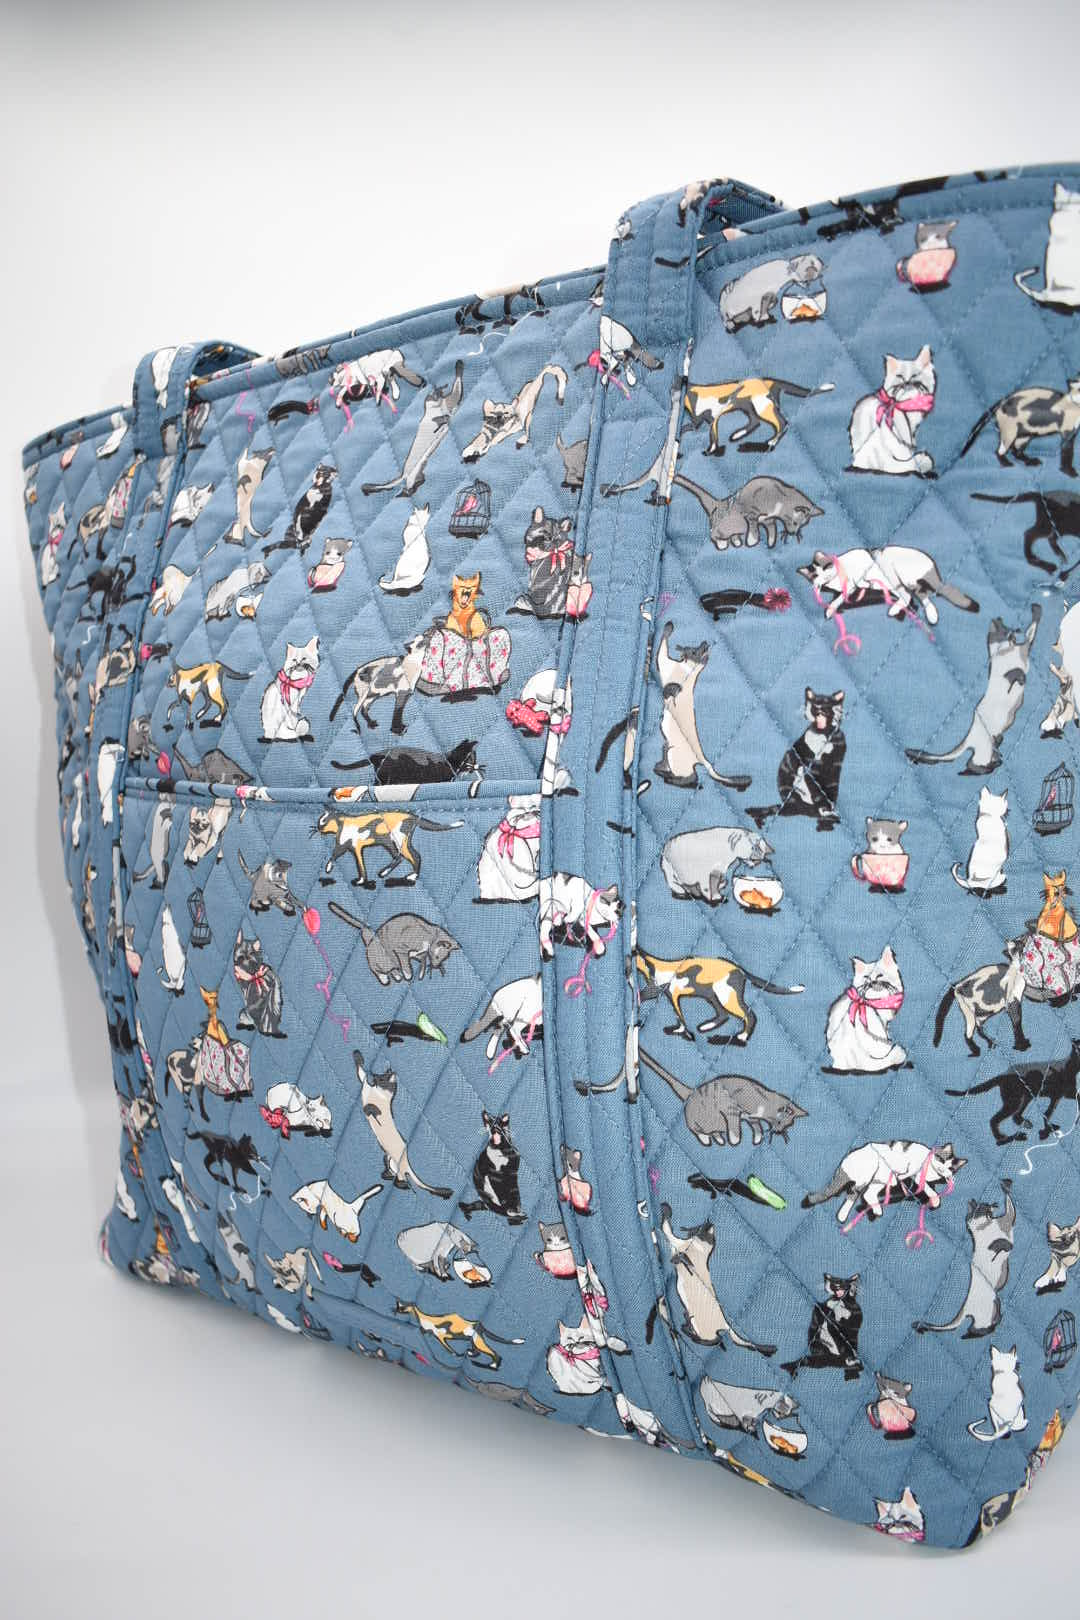 Vera Bradley Large Vera Tote Bag in "Cat's Meow" Pattern